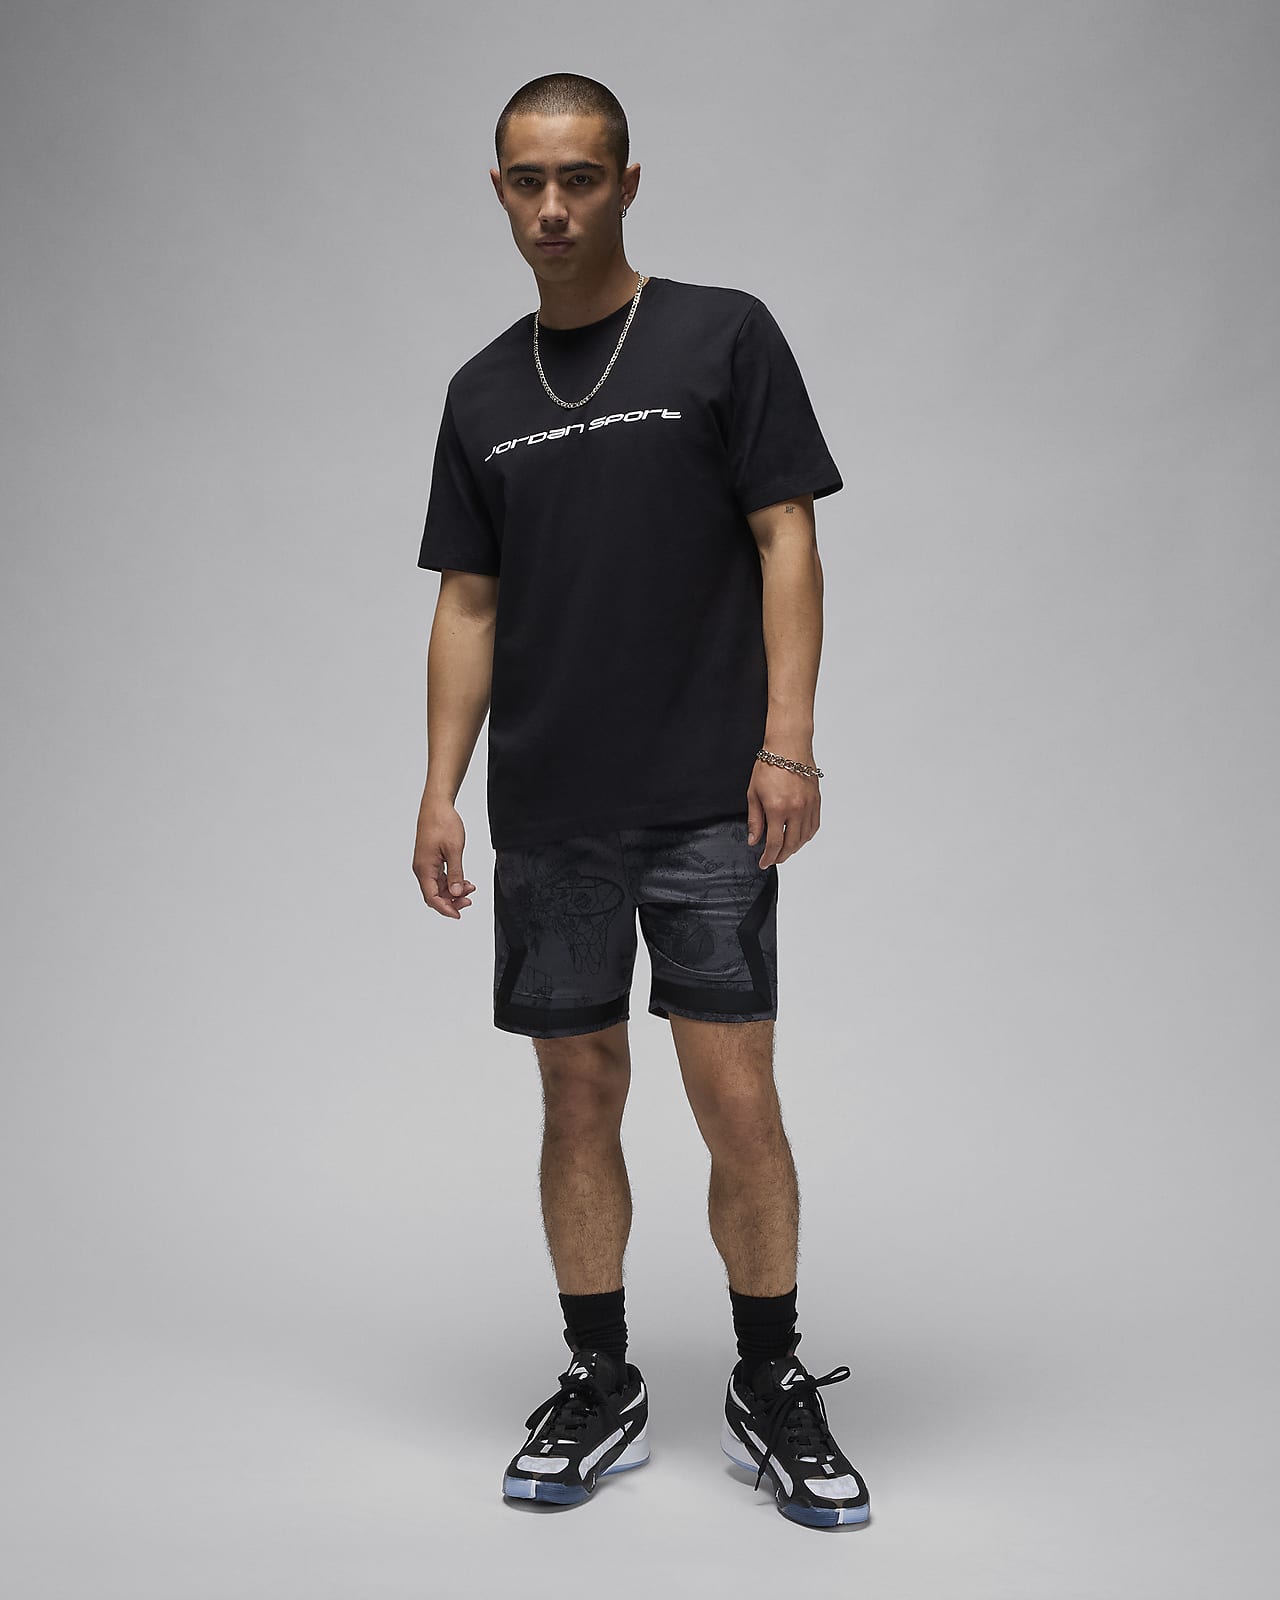 NIKE公式】ジョーダン スポーツ メンズ Dri-FIT Tシャツ.オンラインストア (通販サイト)